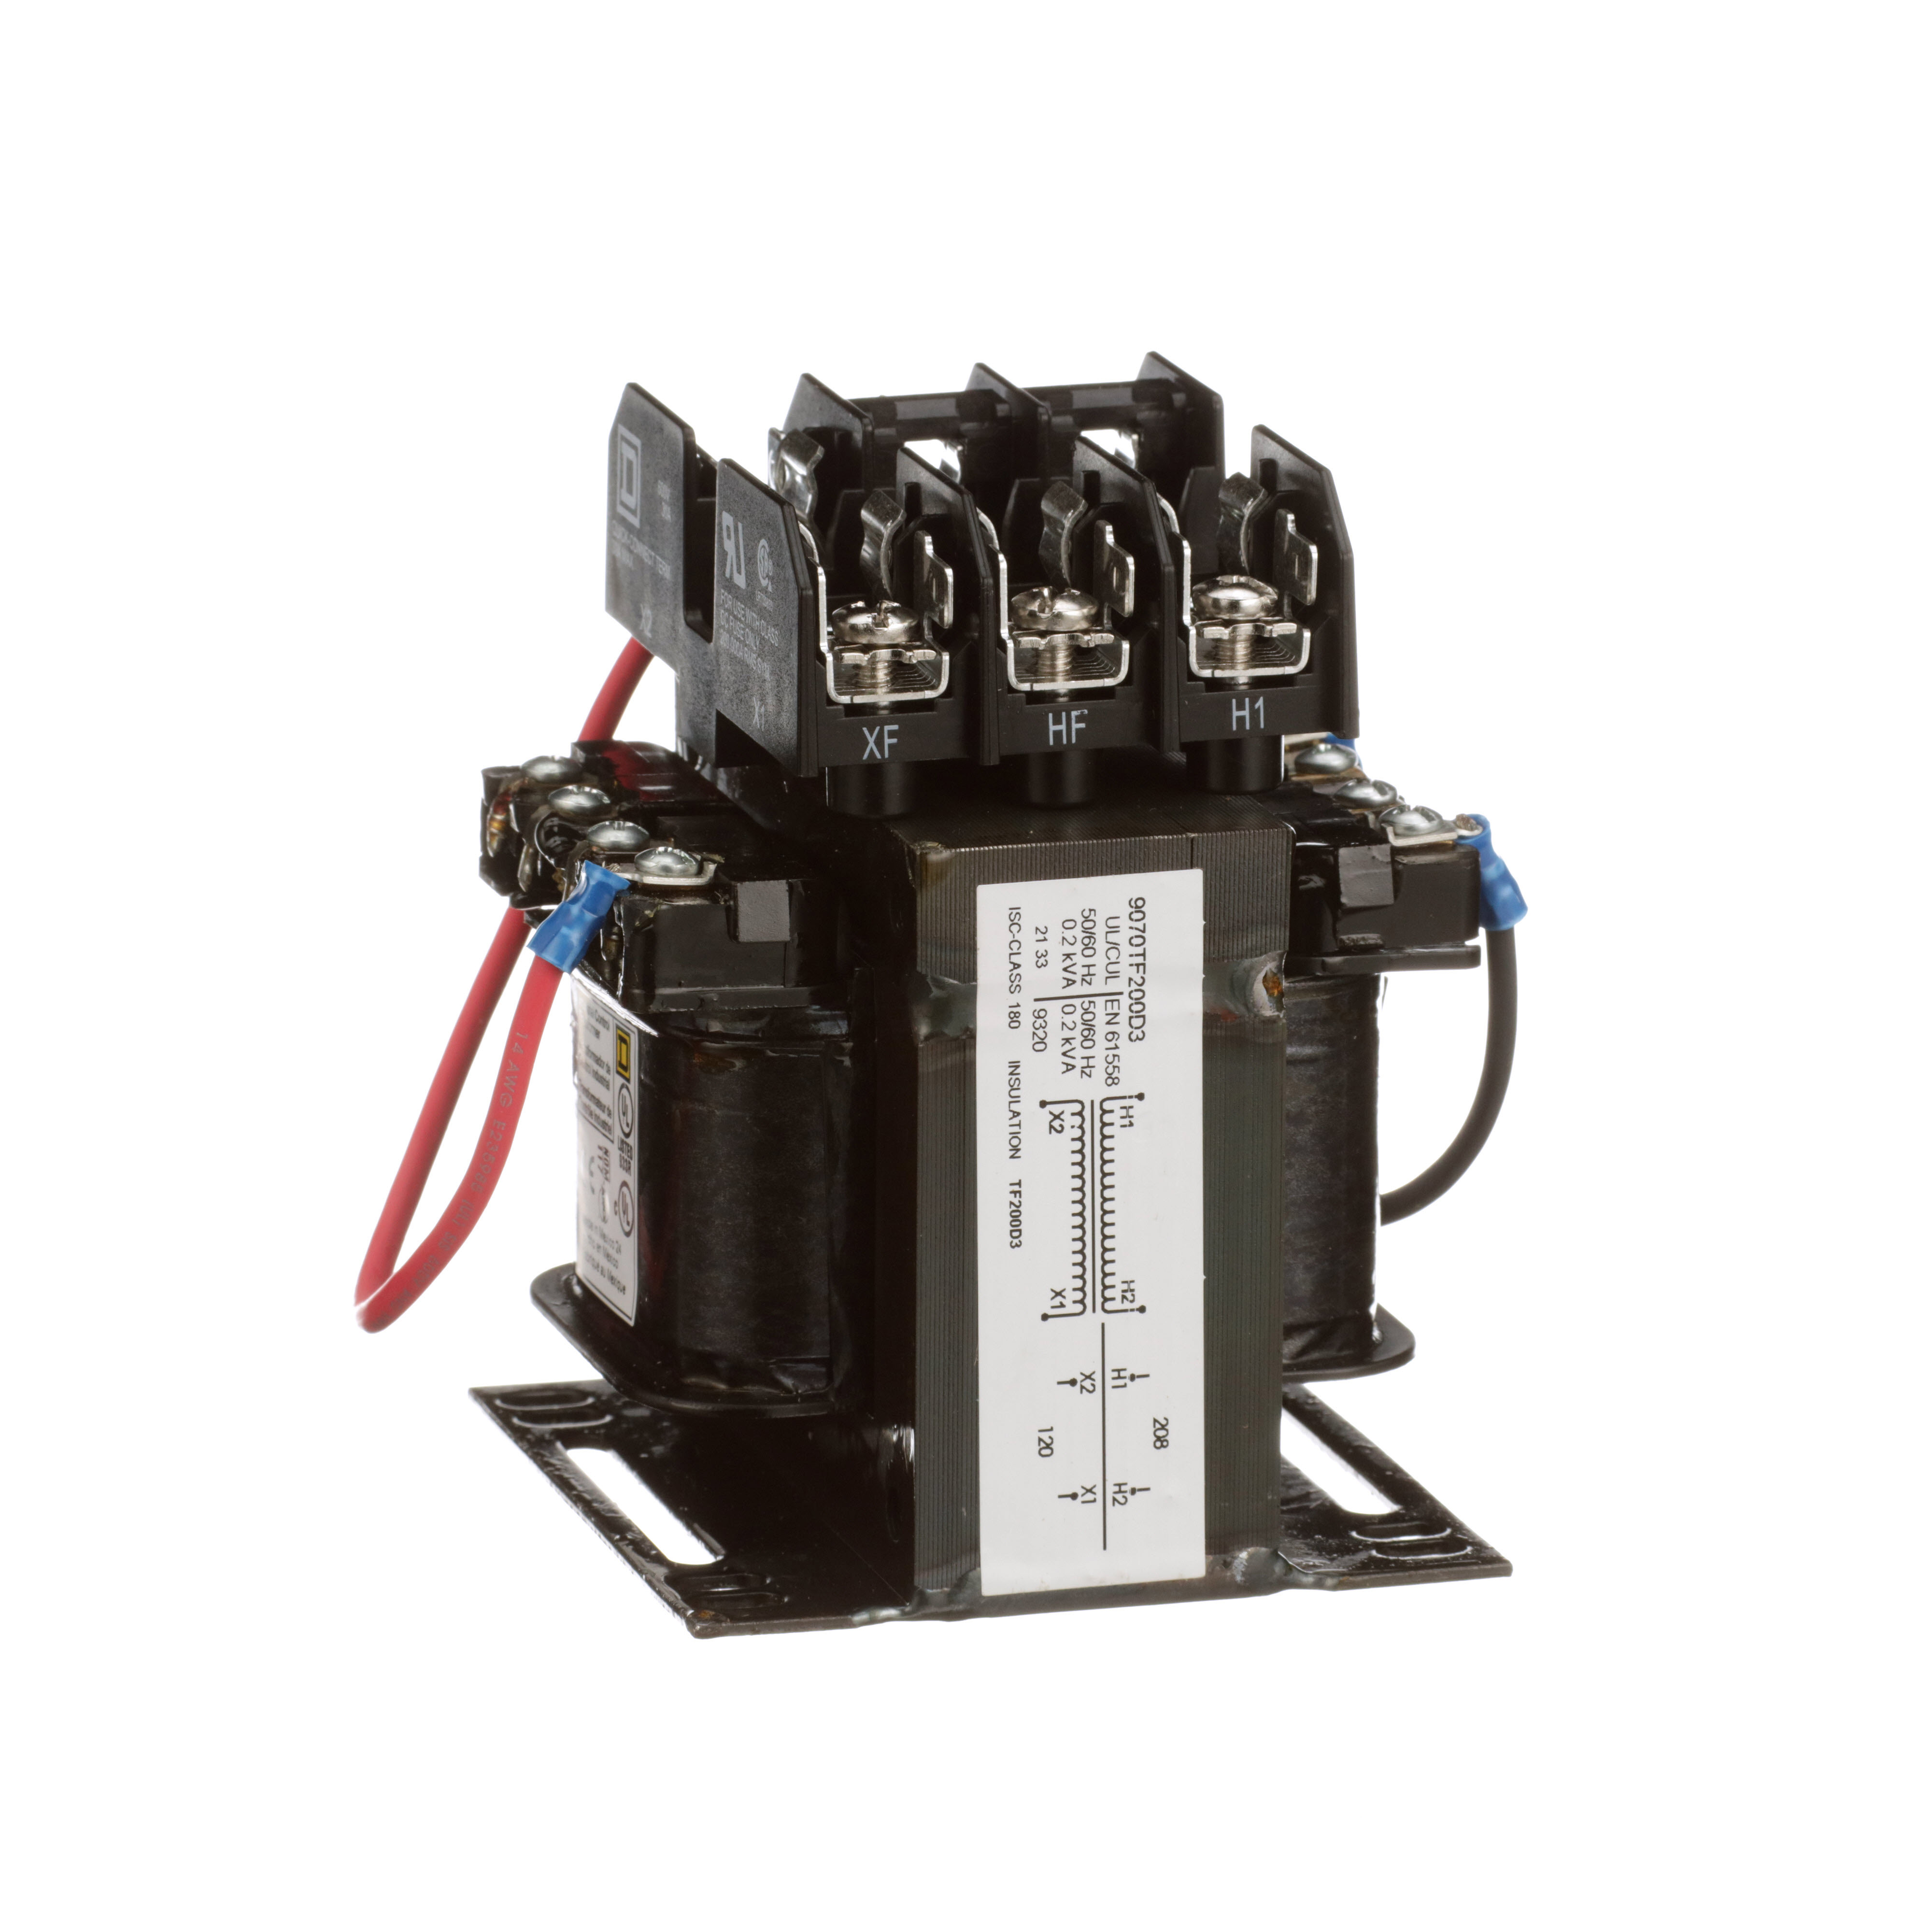 Industrial control transformer, Type TF, 1 phase, 200VA, 208V primary, 120V secondary, 50/60Hz